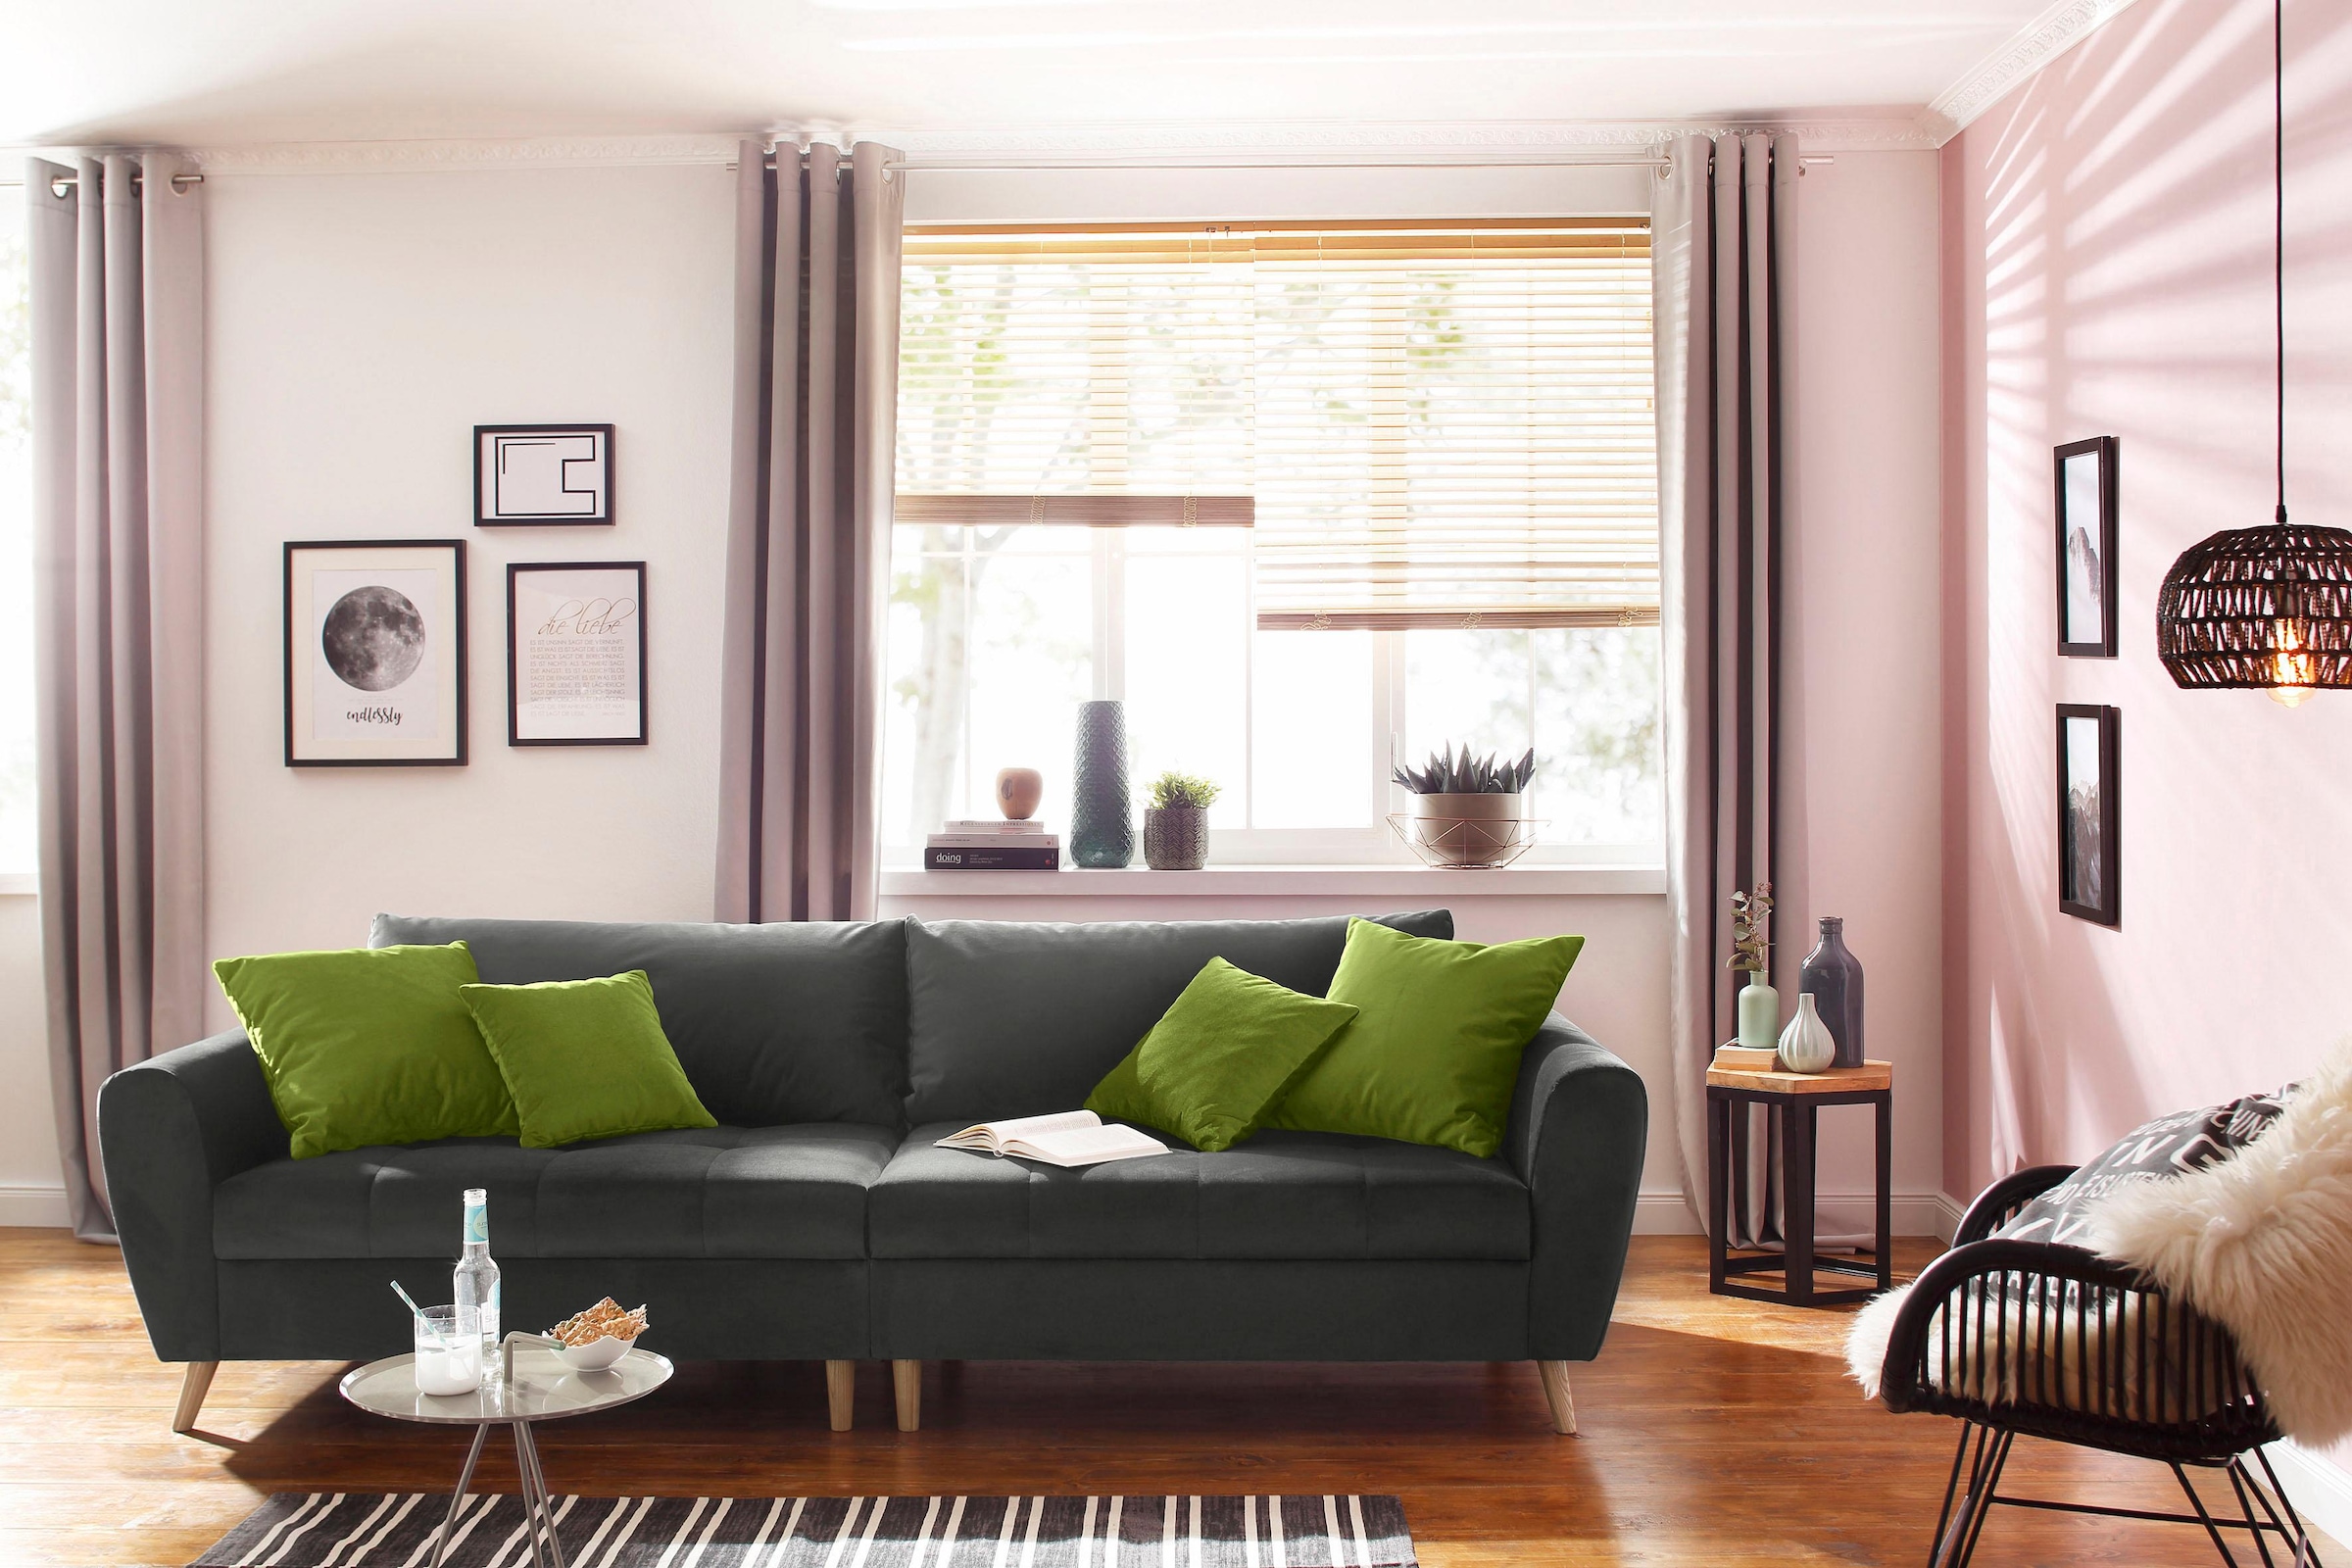 Big-Sofa »Penelope«, feine online bei Steppung, OTTO skandinavisches Design Kissen, affaire Home lose